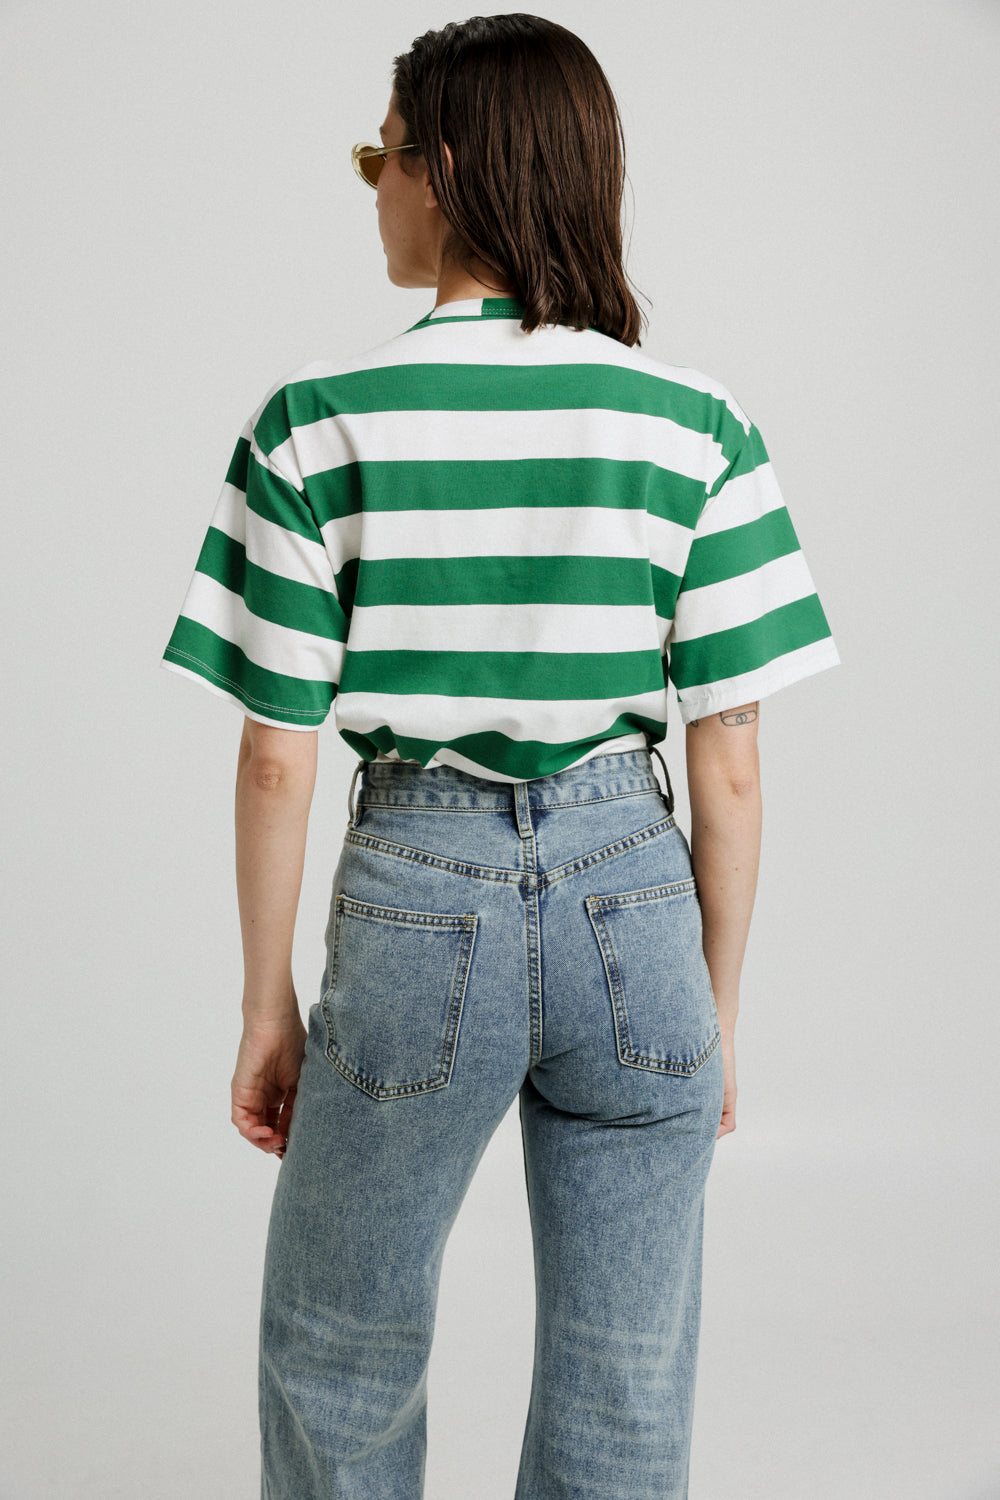 Rock Green Stripes T-Shirt